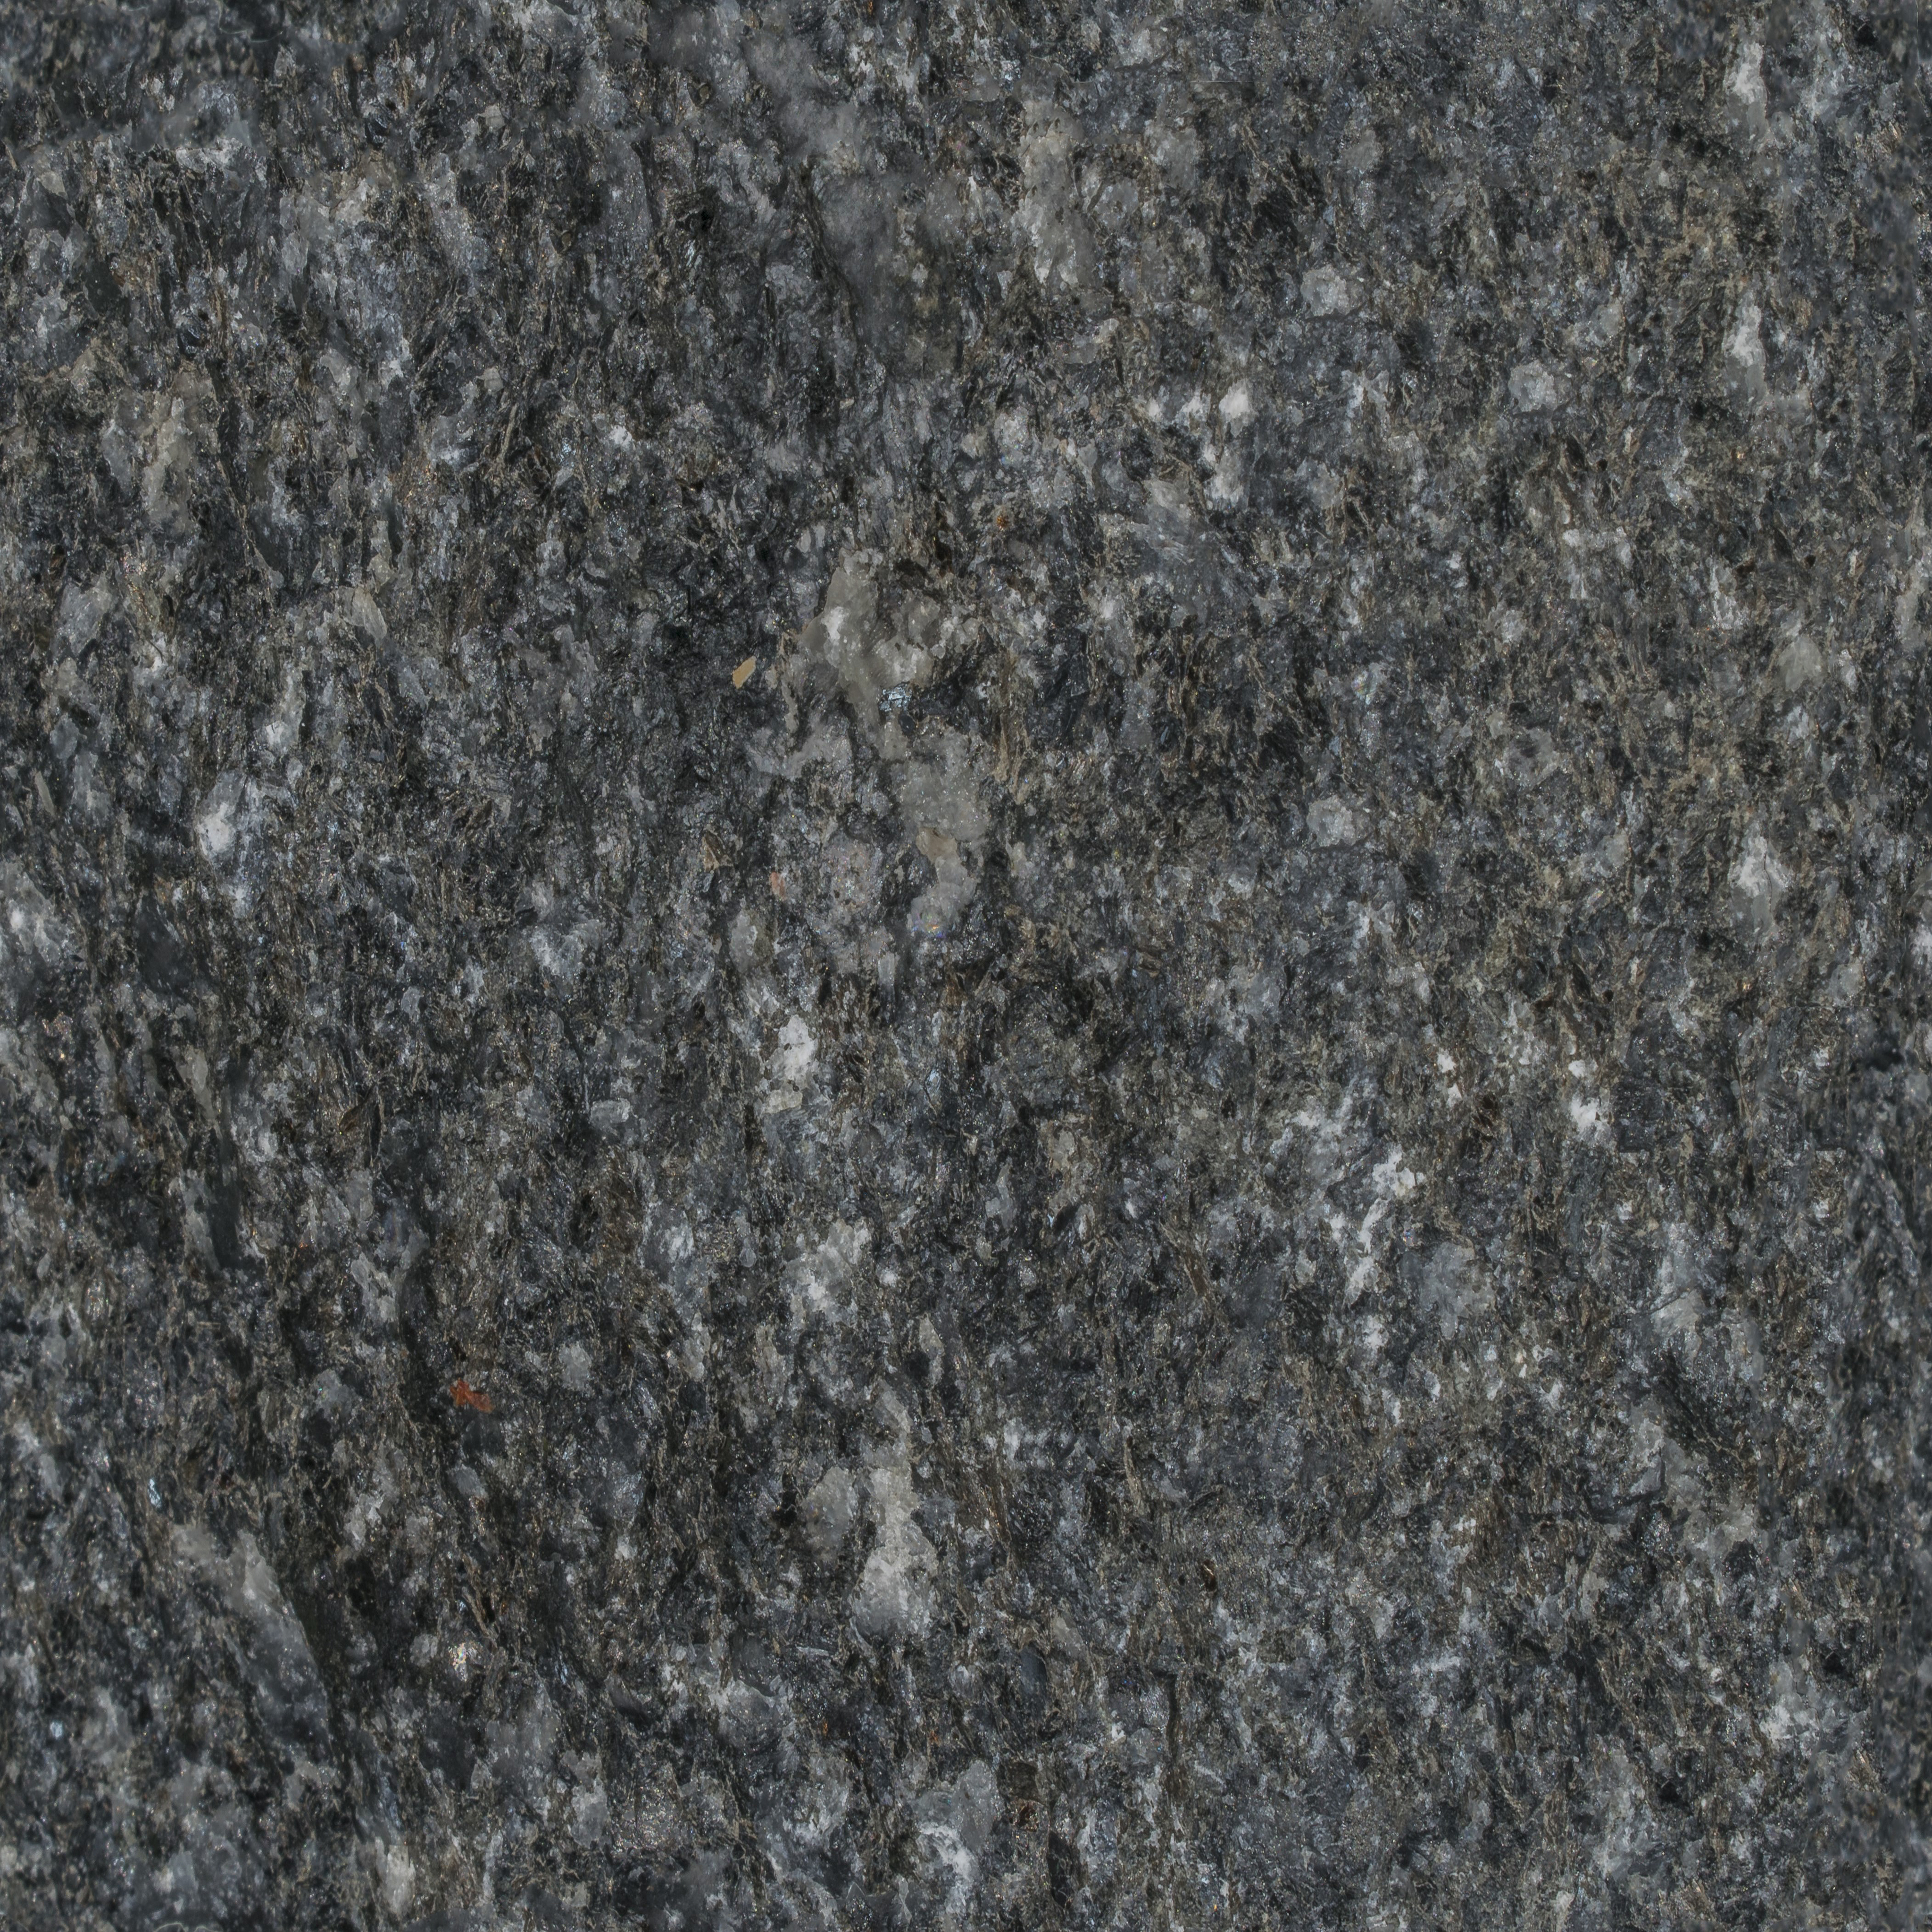 Seamless Stone Texture by mushin3D on DeviantArt